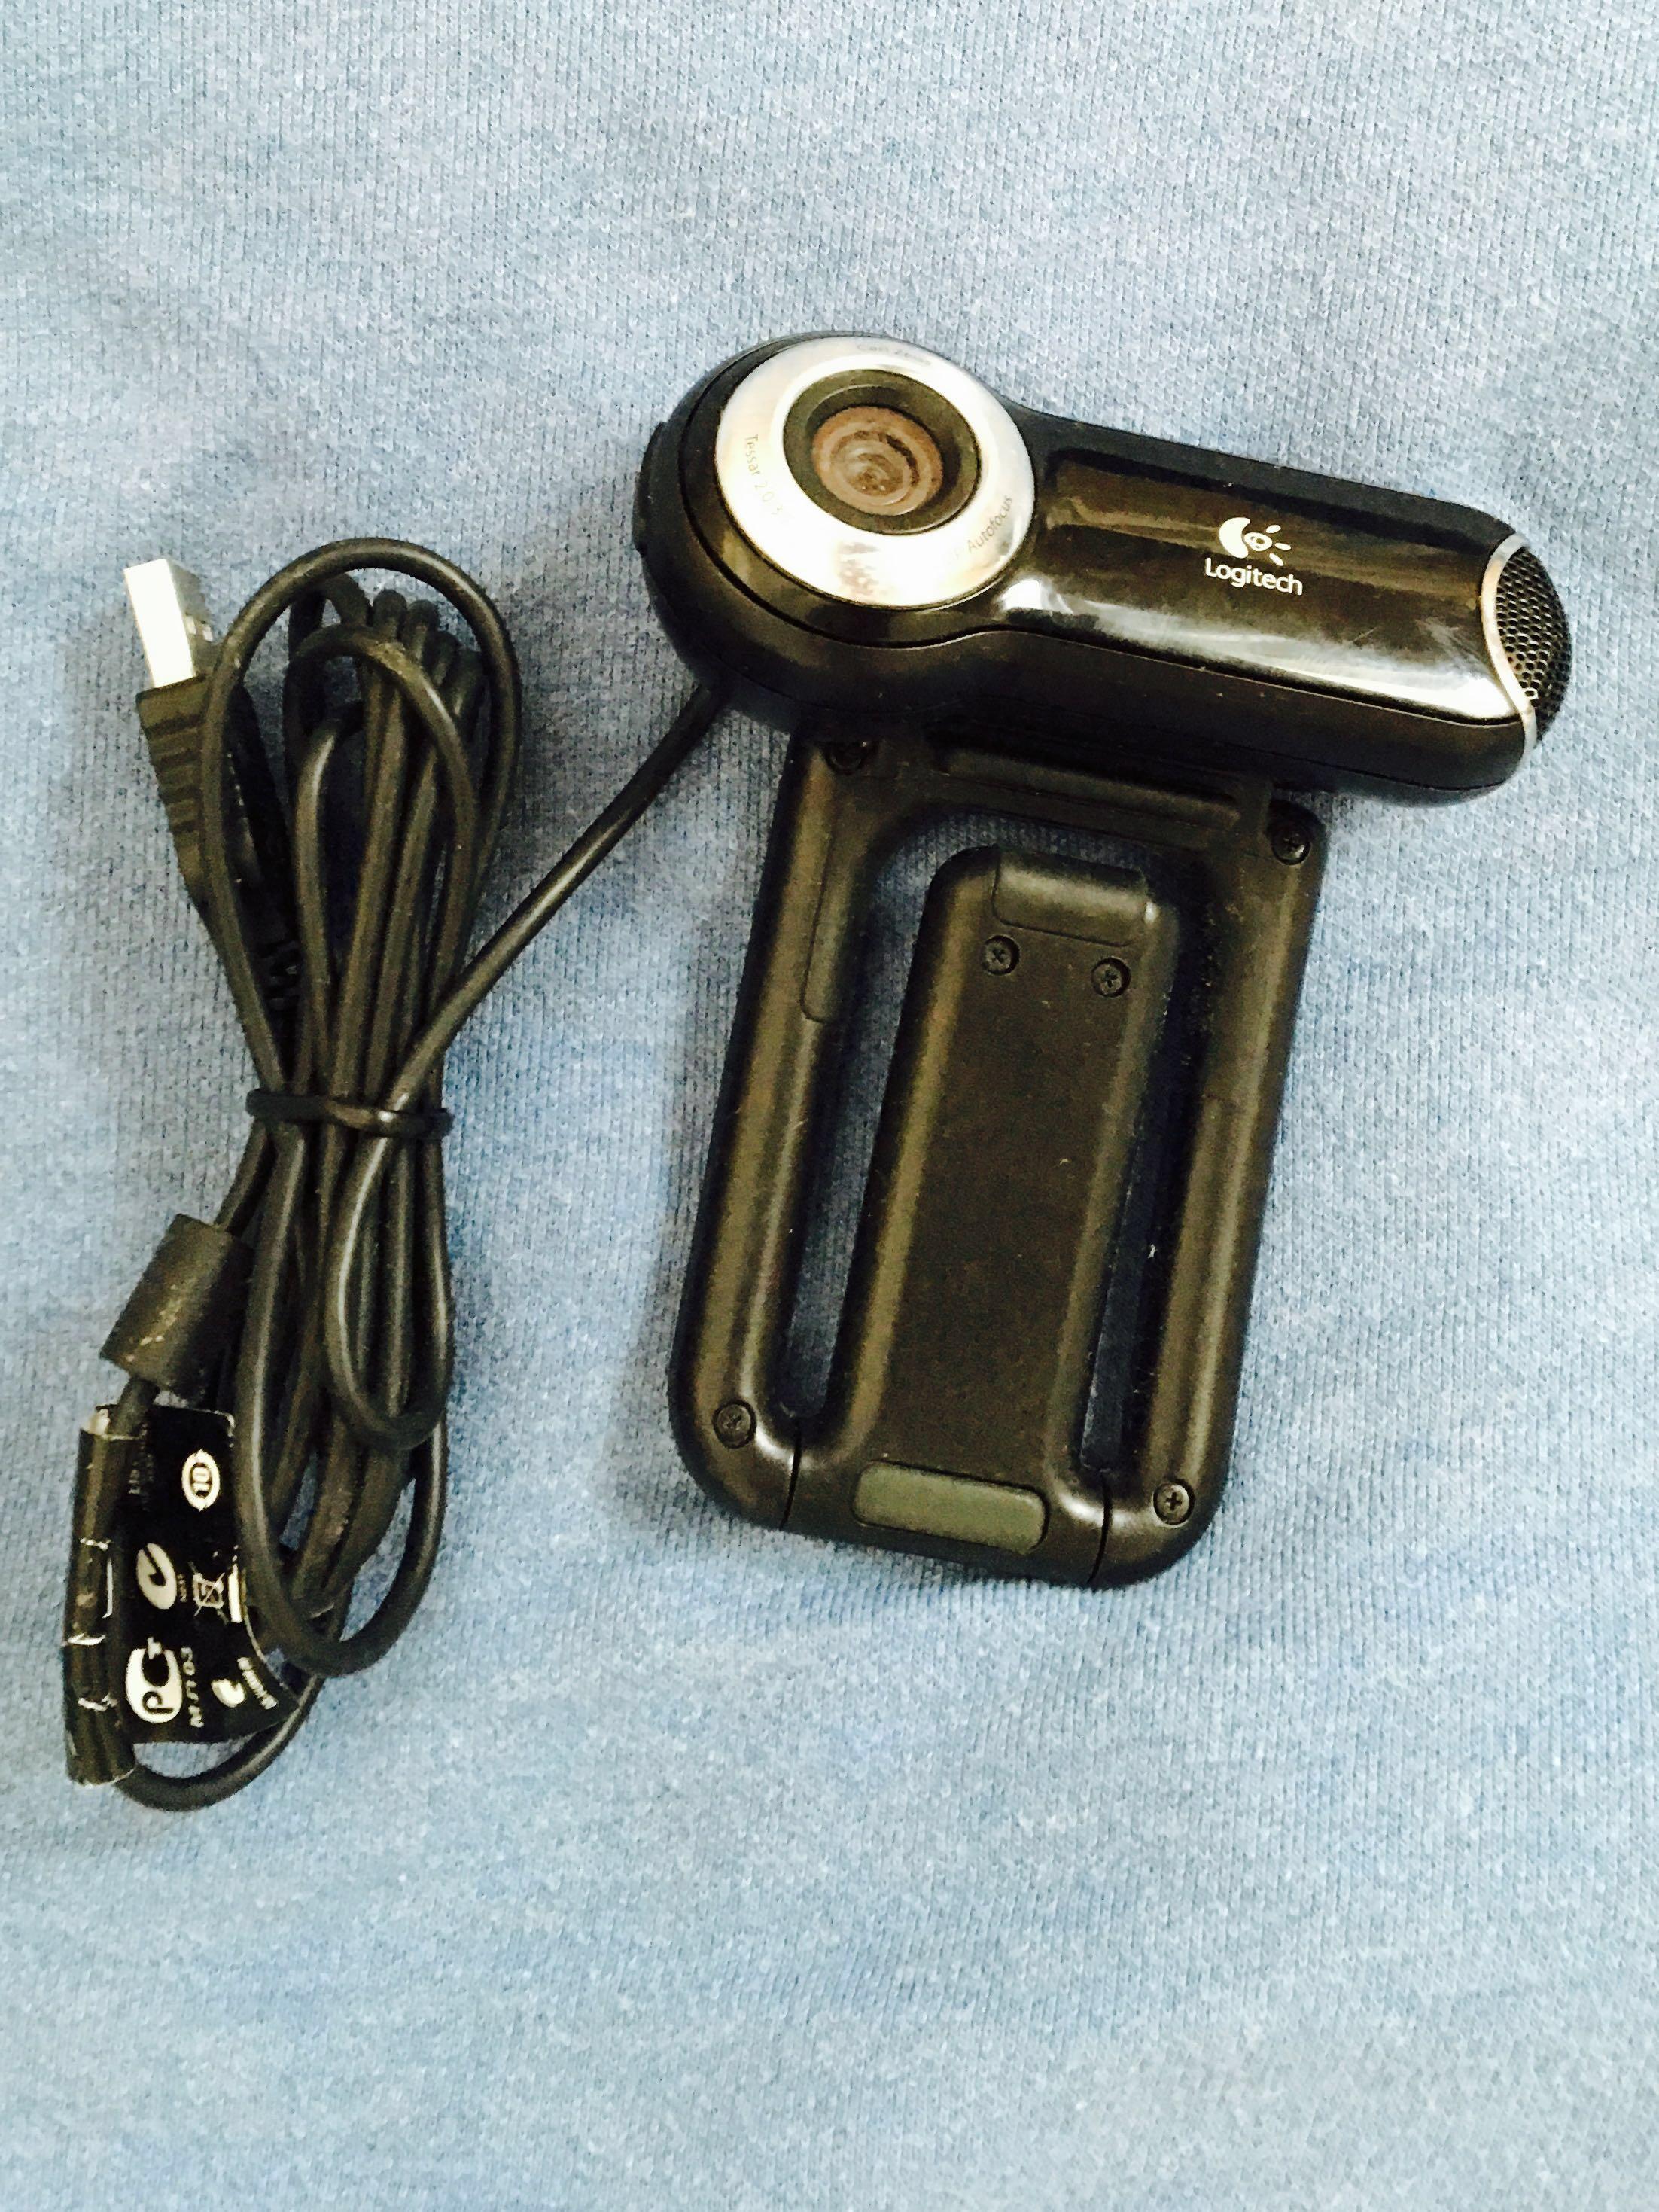 Logitech Pro 9000 PC Internet Camera Webcam with 2.0-Megapixel Video  Resolution and Carl Zeiss Lens Optics